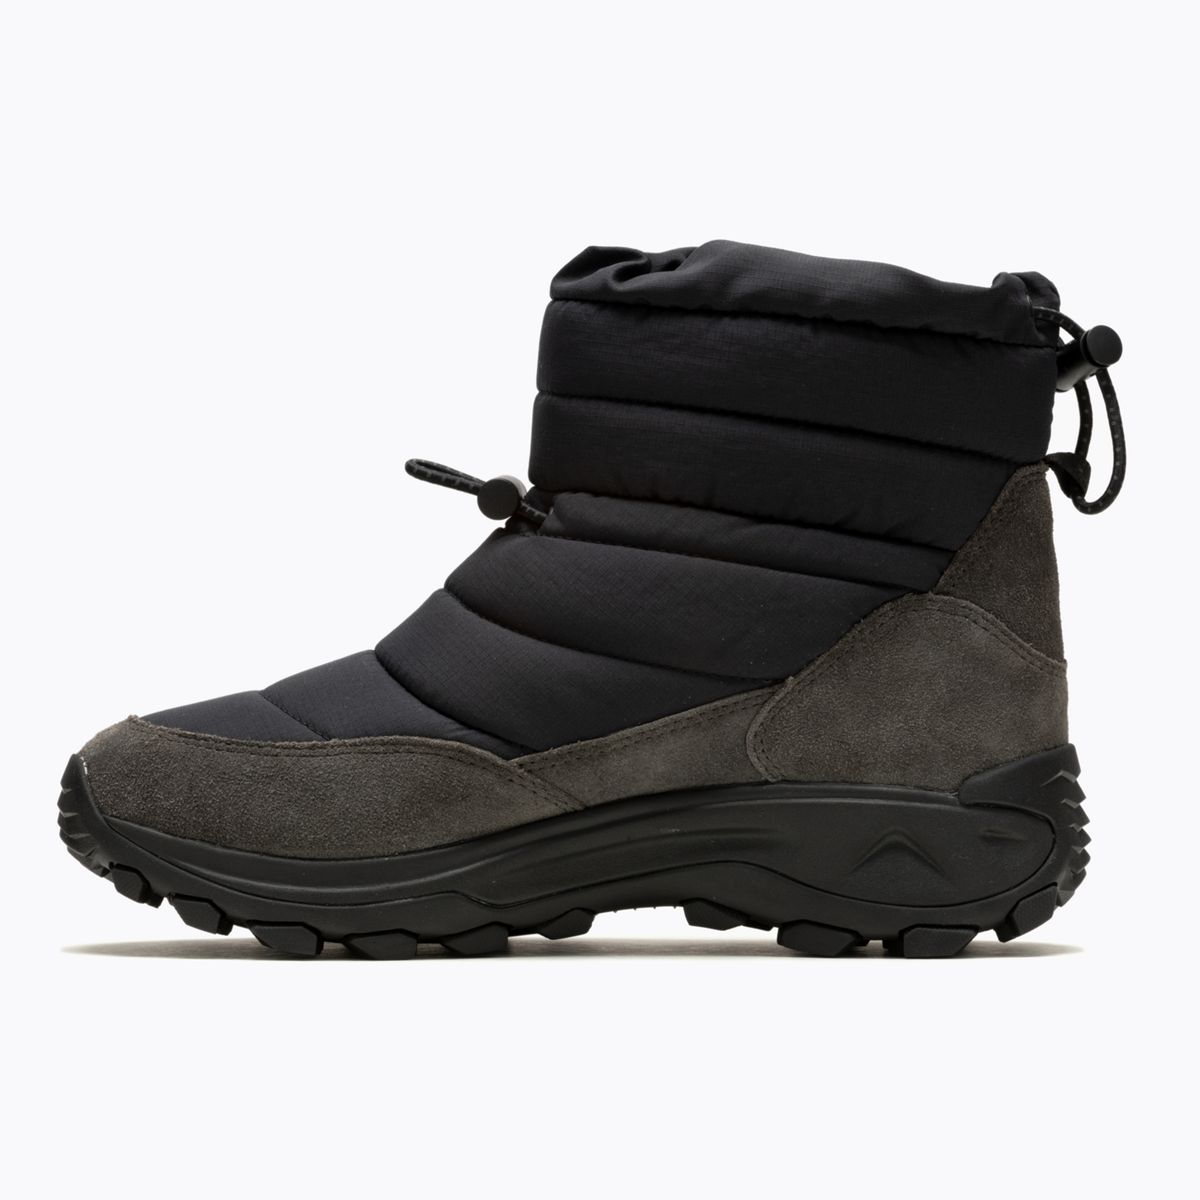 Winter Moc Zero Tall - Boots | Merrell